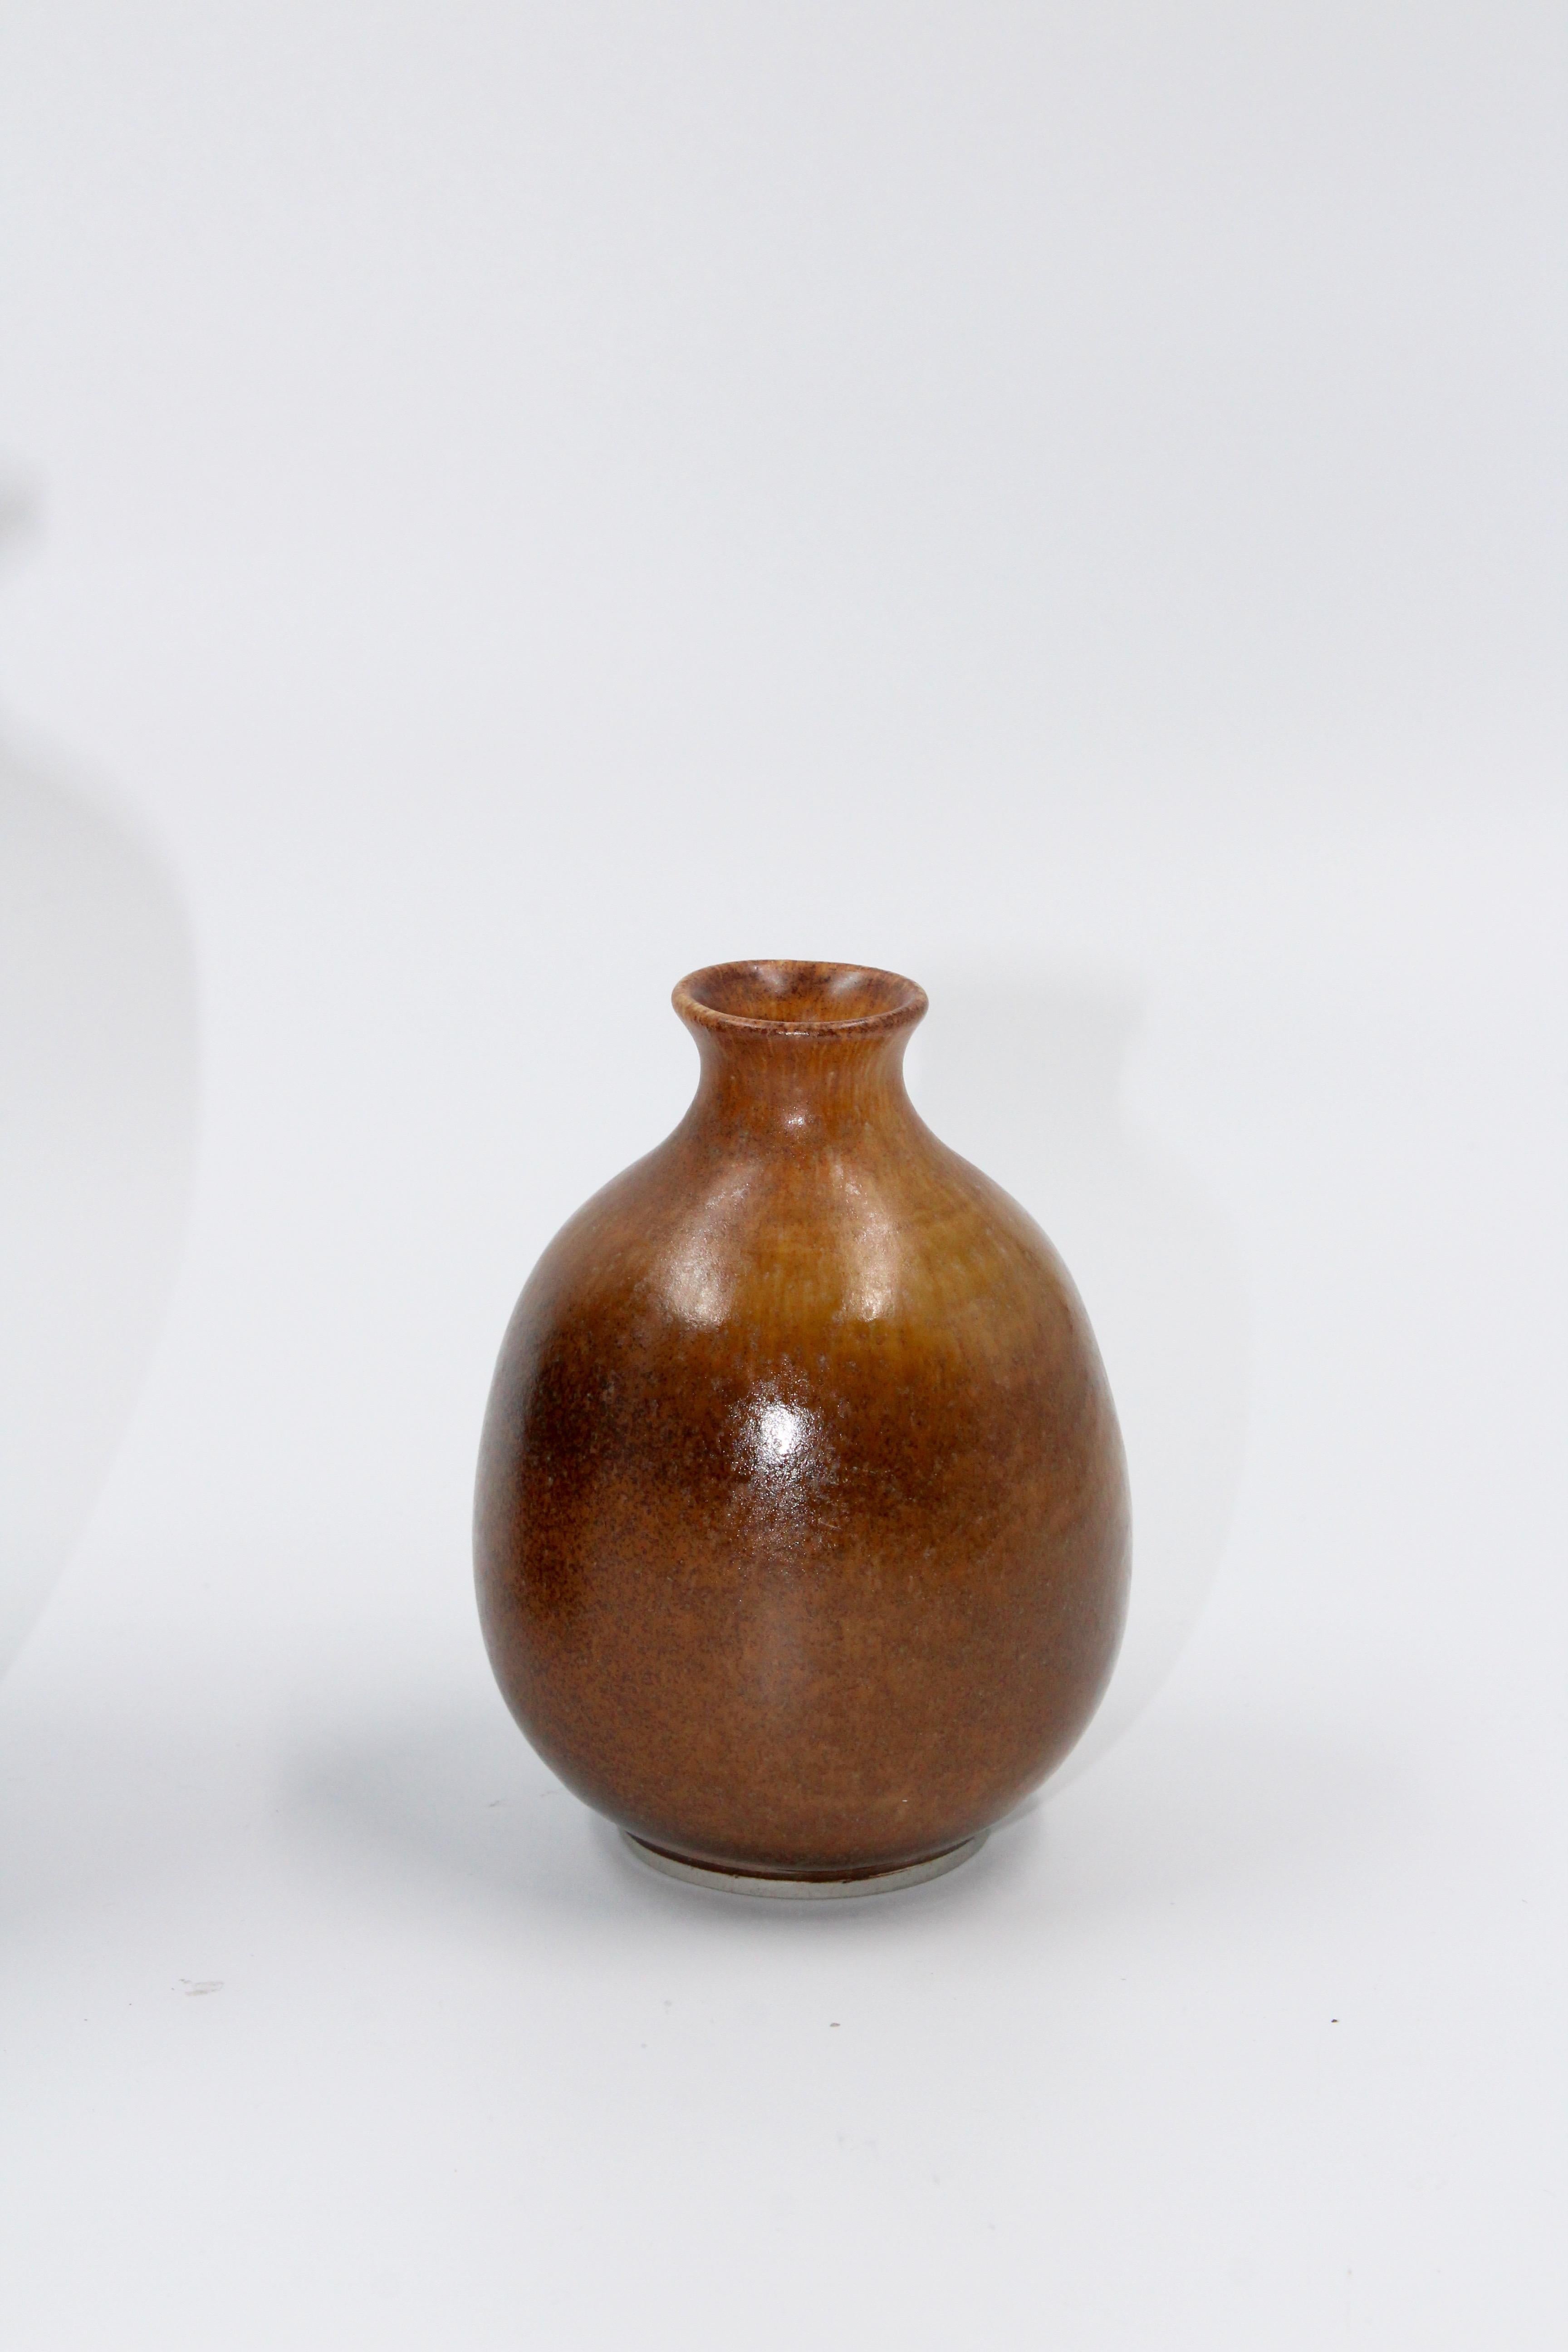 Swedish Midcentury Ceramic Vases by Egon Larsson, Höganäs Keramik, 1950s For Sale